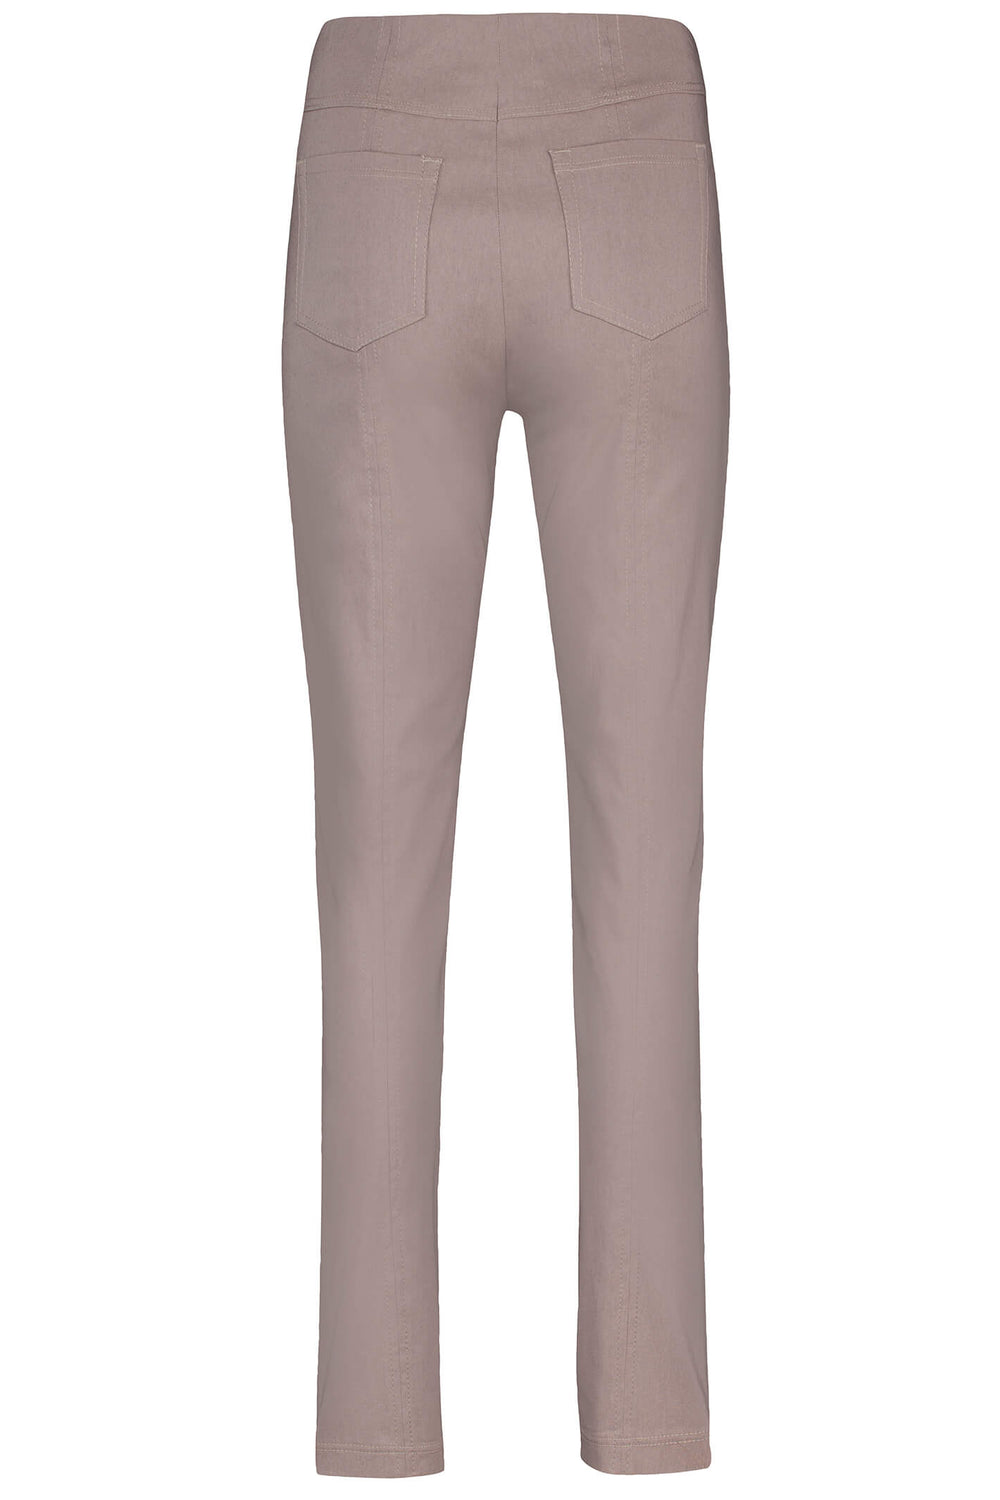 Robell 51559-5499-38 Bella K Almond Petite Trousers (Short 73cm) - Dotique